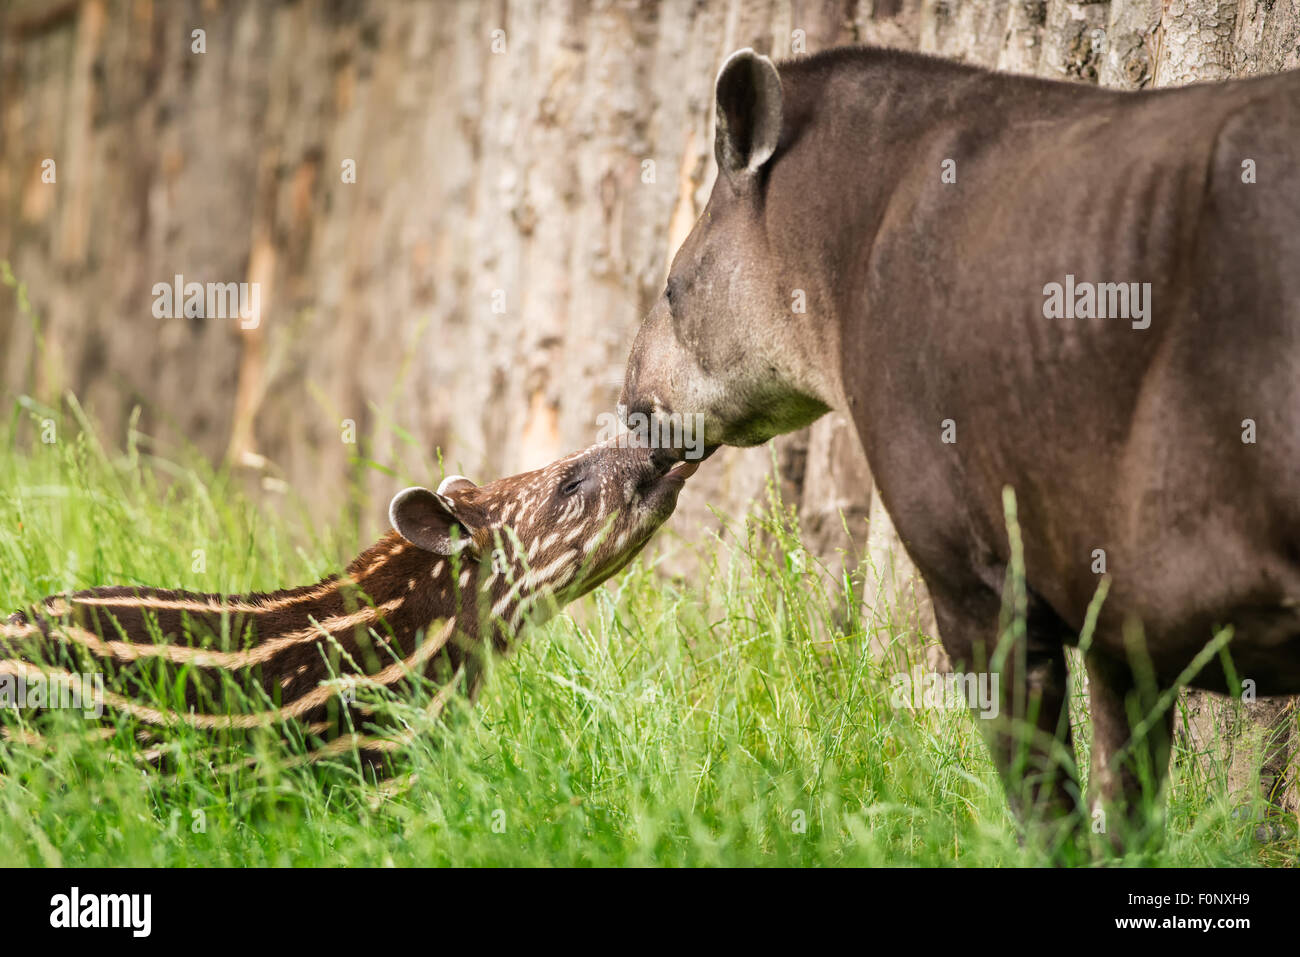 Baby of the endangered South American tapir (Tapirus terrestris), also called Brazilian tapir or lowland tapir with its mother Stock Photo